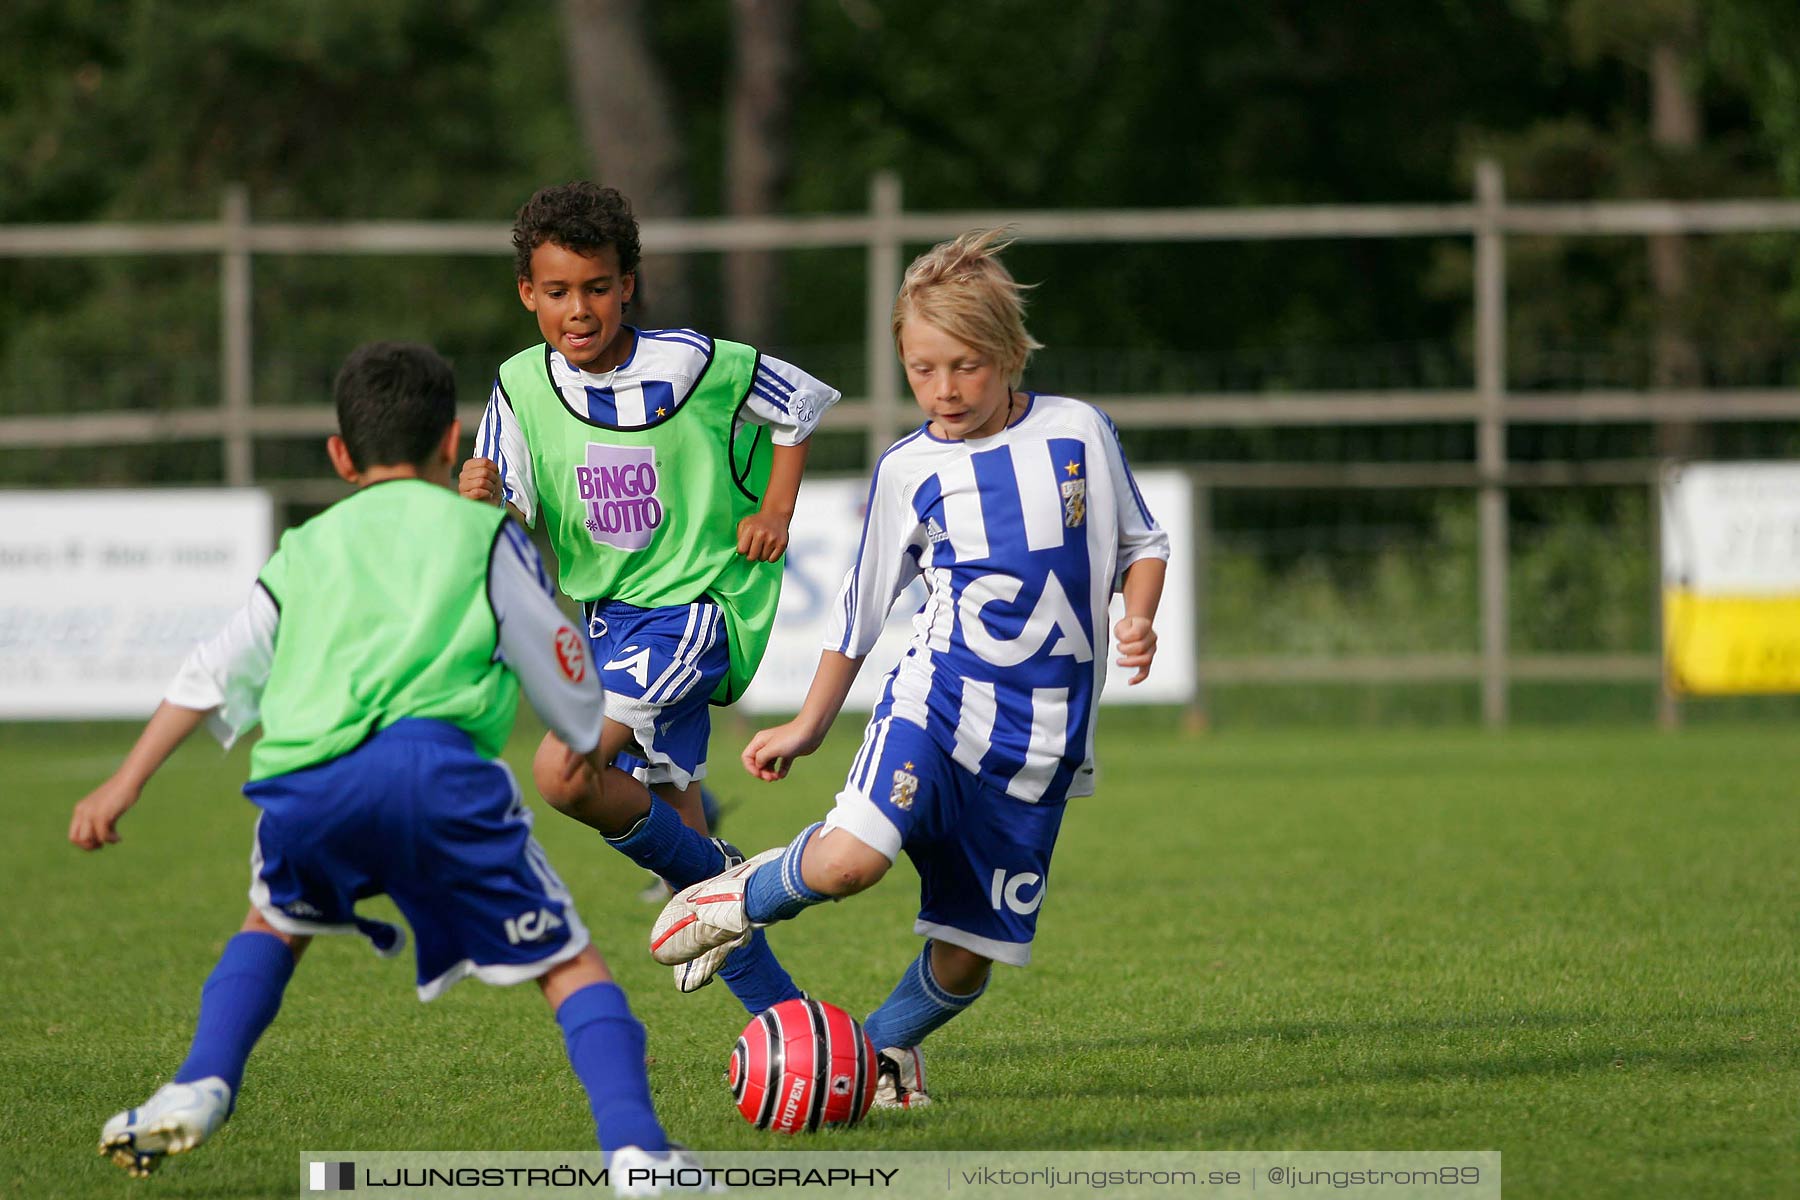 Ulvacupen 2006,mix,Åbrovallen,Ulvåker,Sverige,Fotboll,,2006,147433